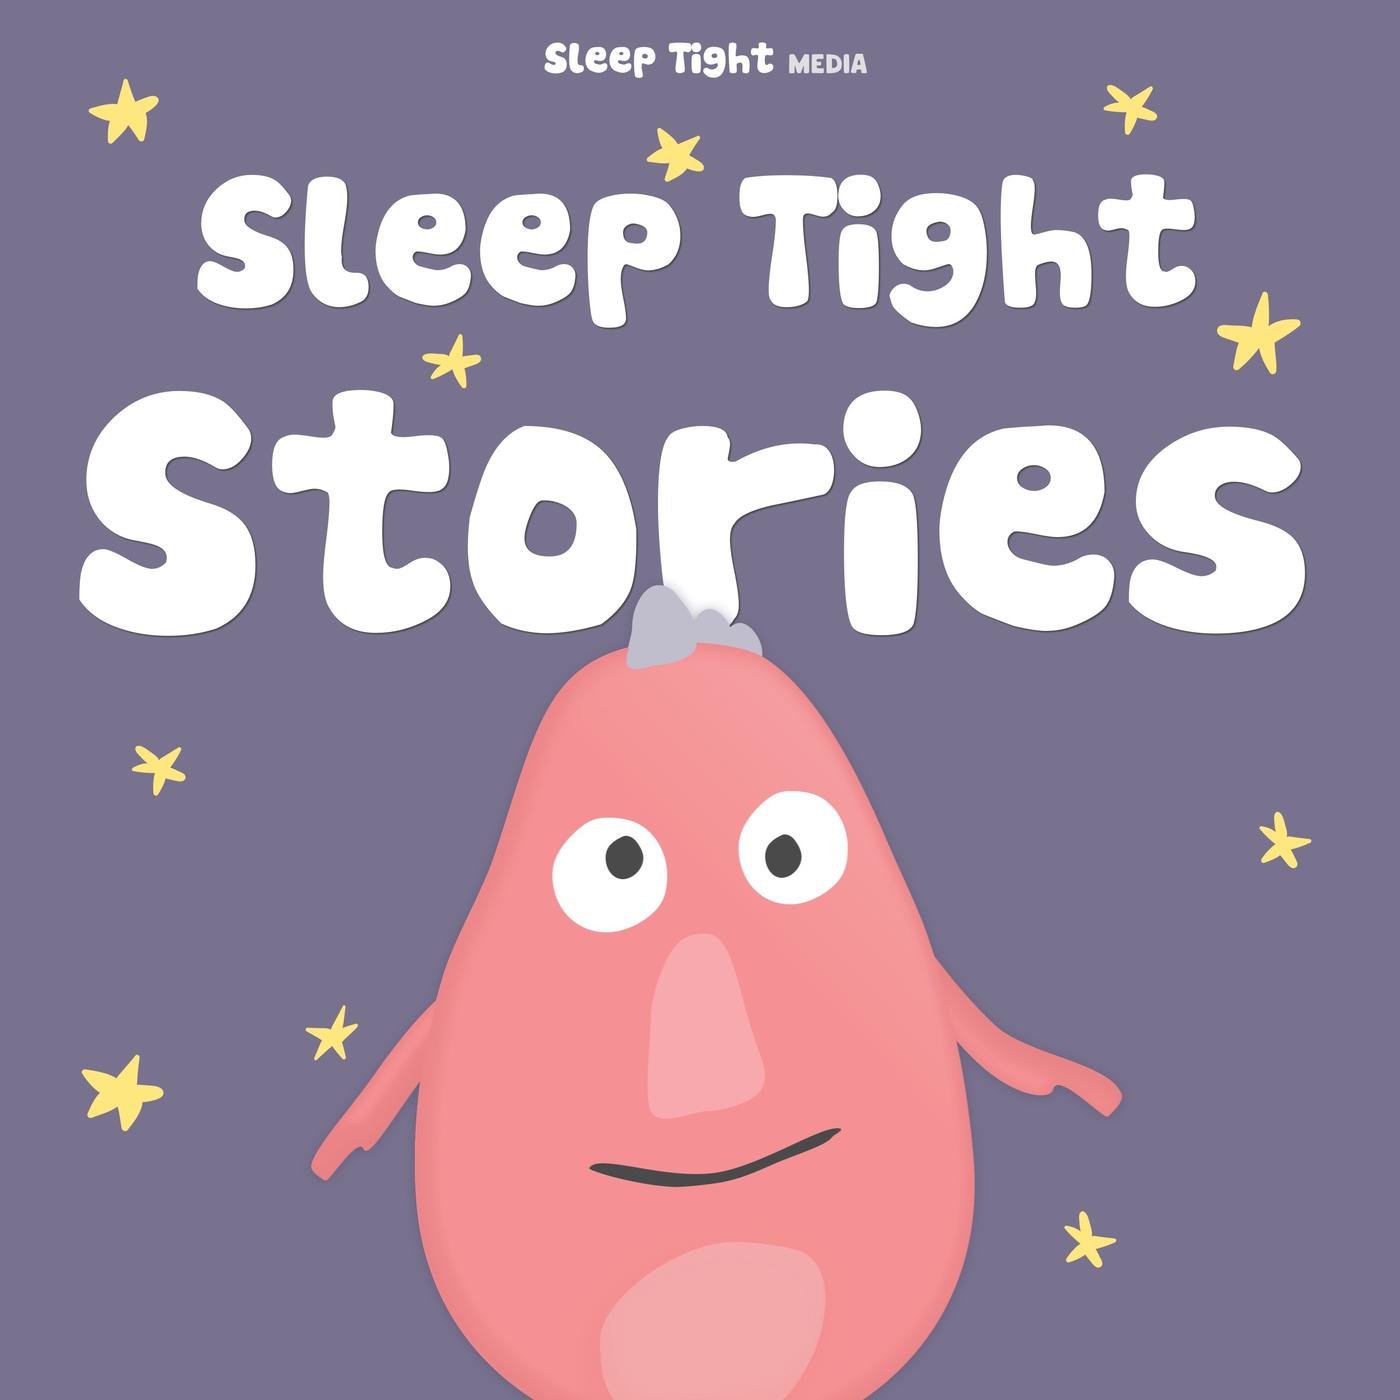 sleep-tight-stories-bedtime-stories-for-kx4wCV1Ijeq-NTAb5ynlOEd.1400x1400 (2).jpg